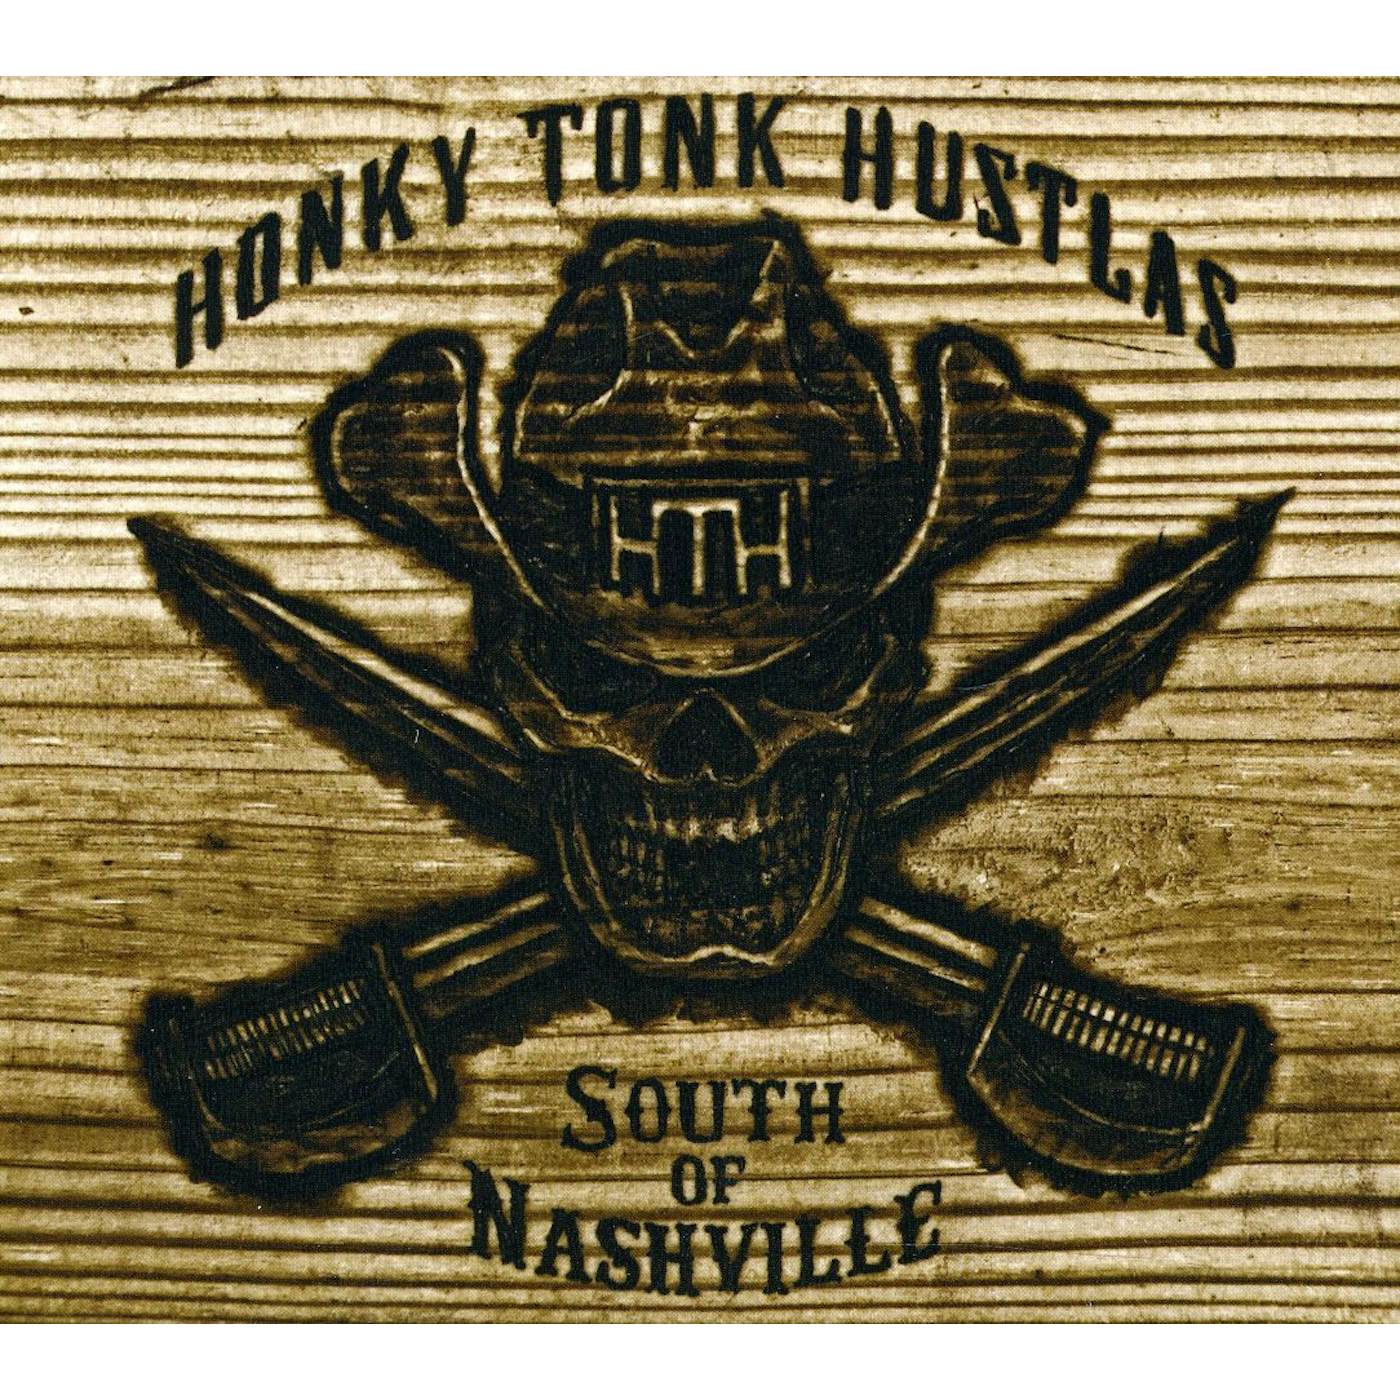 Honky Tonk Hustlas SOUTH OF NASHVILLE CD